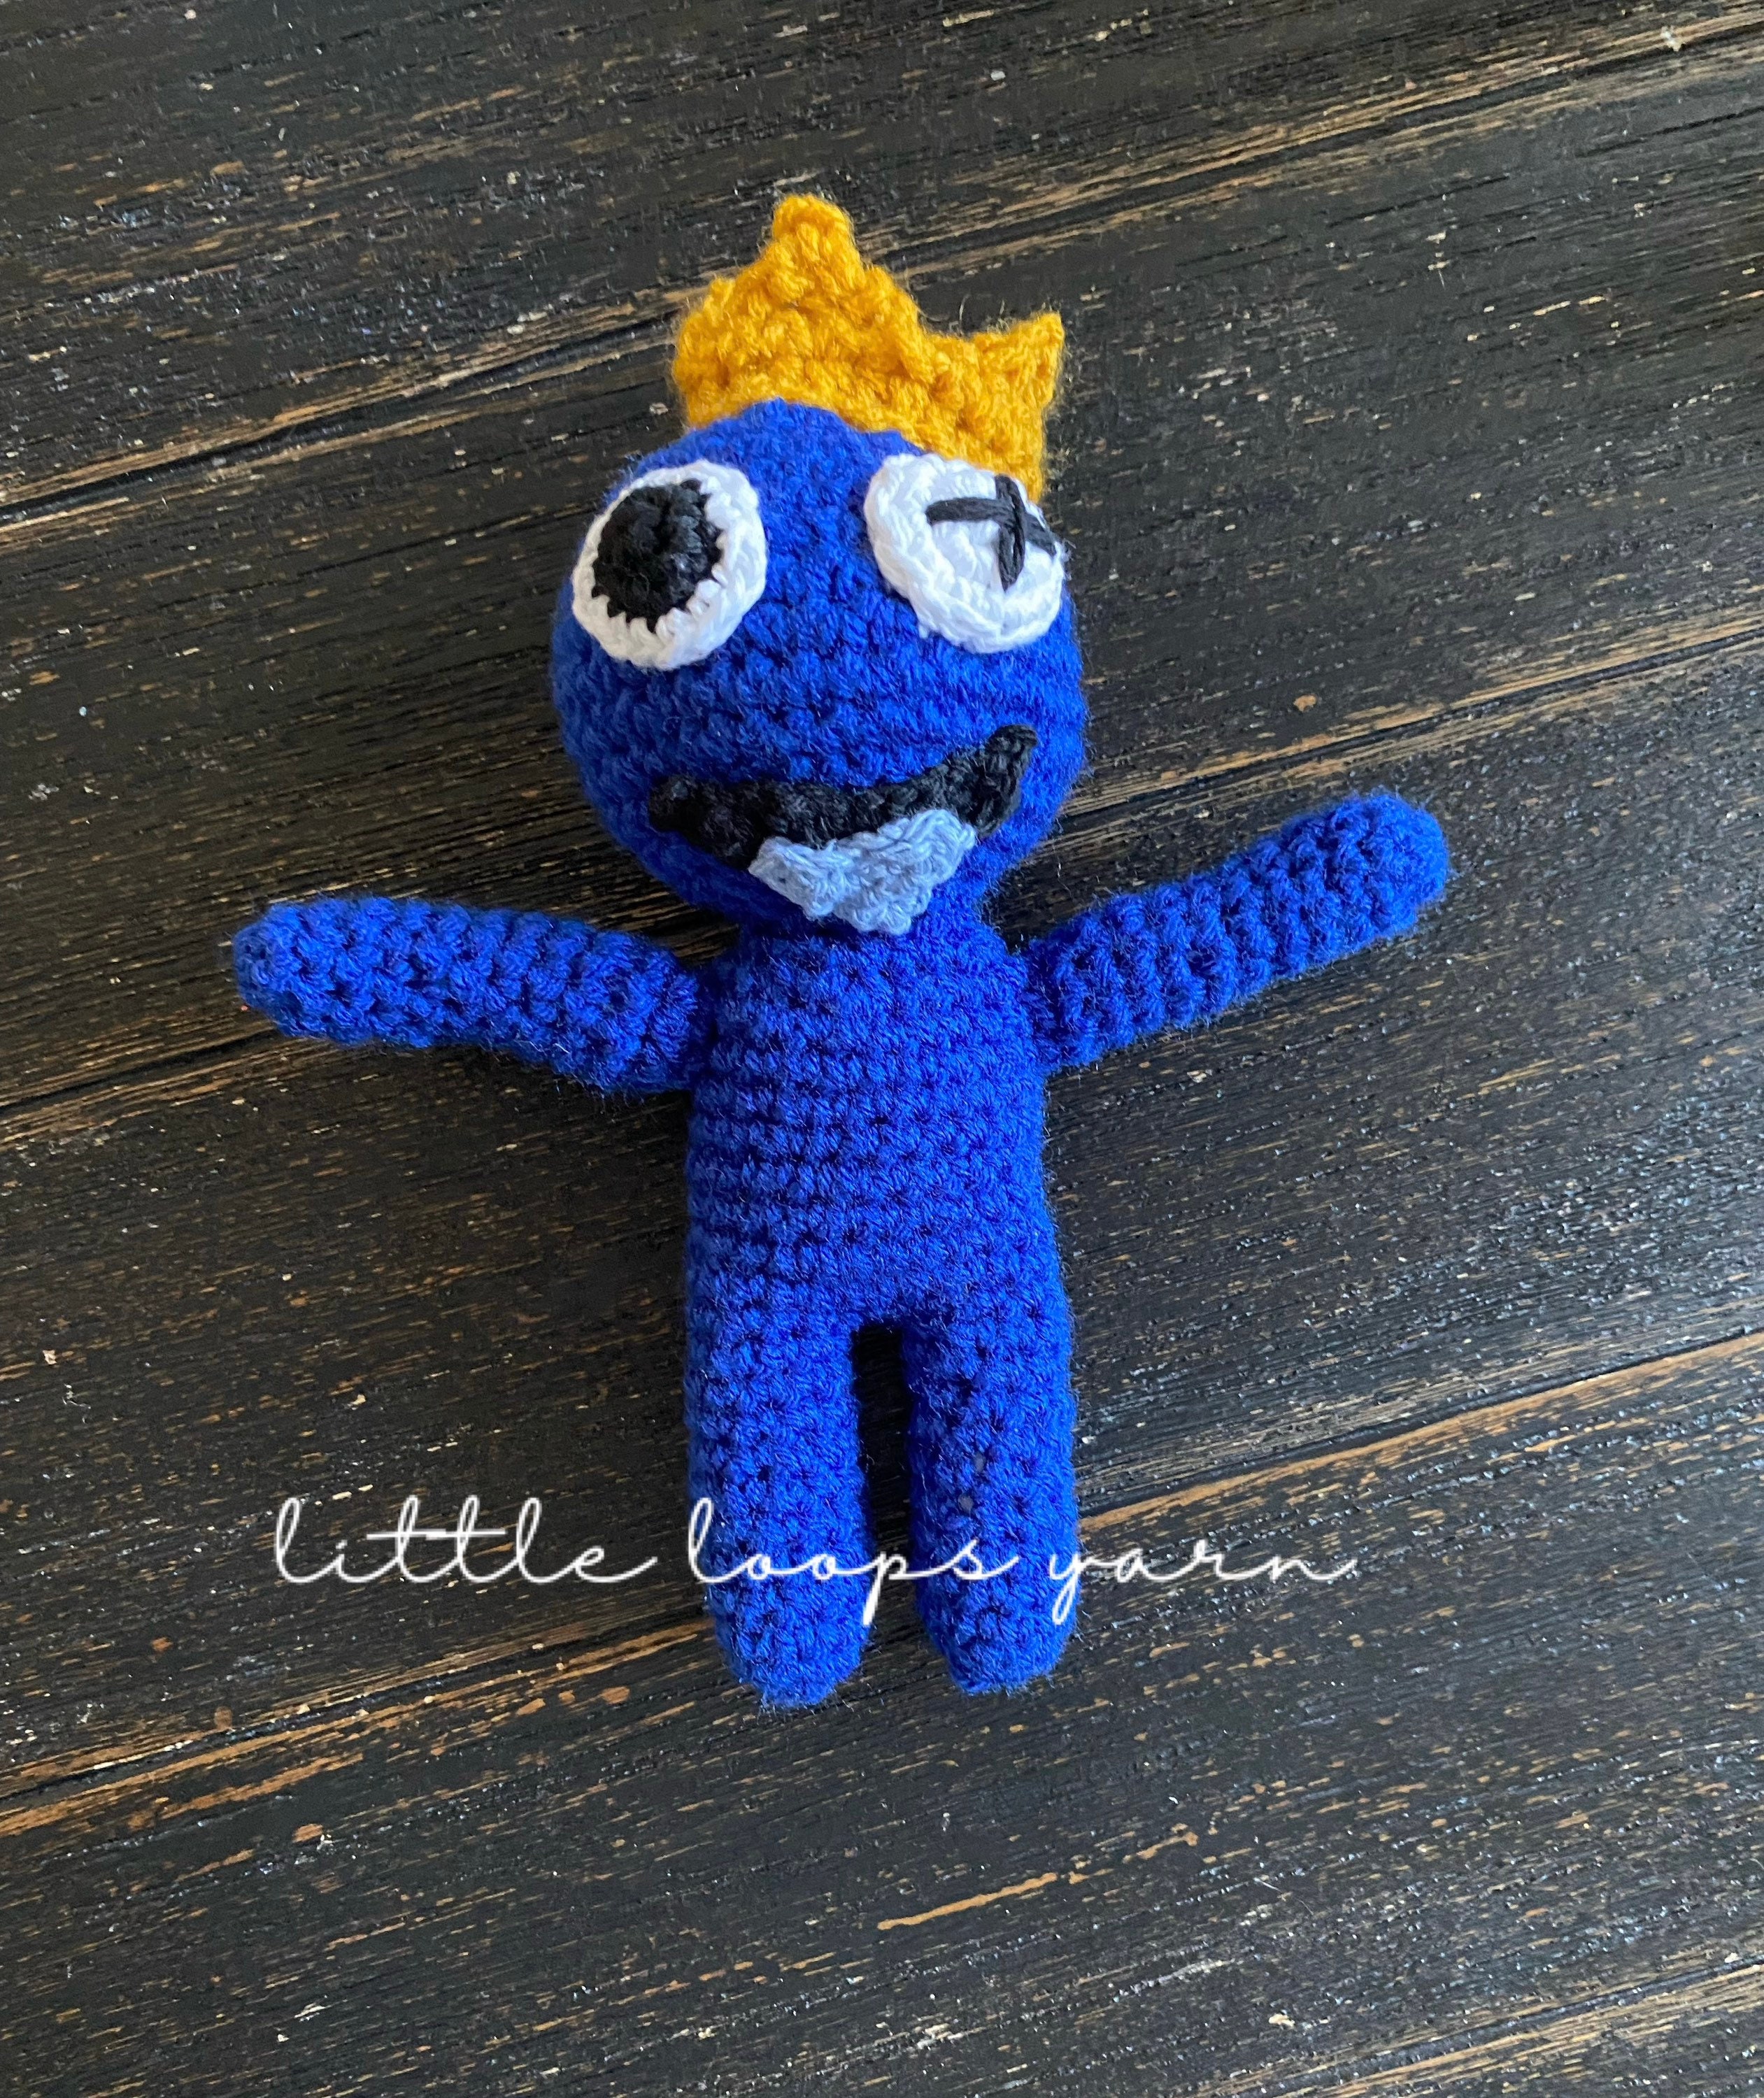 Blue Crochet Plush style2 (20cm) Custom Rainbow Friends Plush